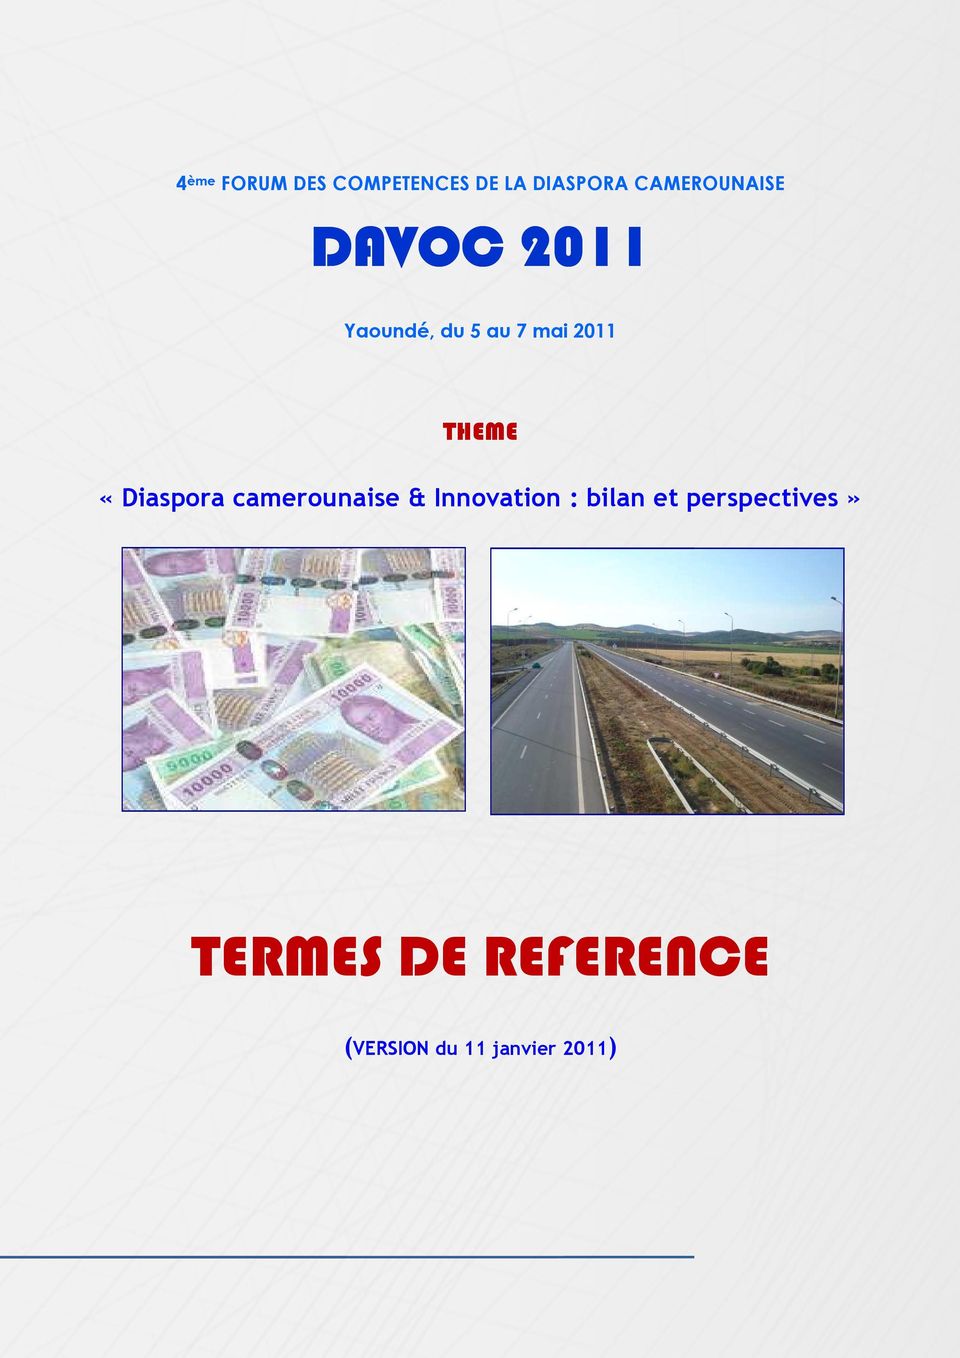 camerounaise & Innovation : bilan et perspectives» TERMES